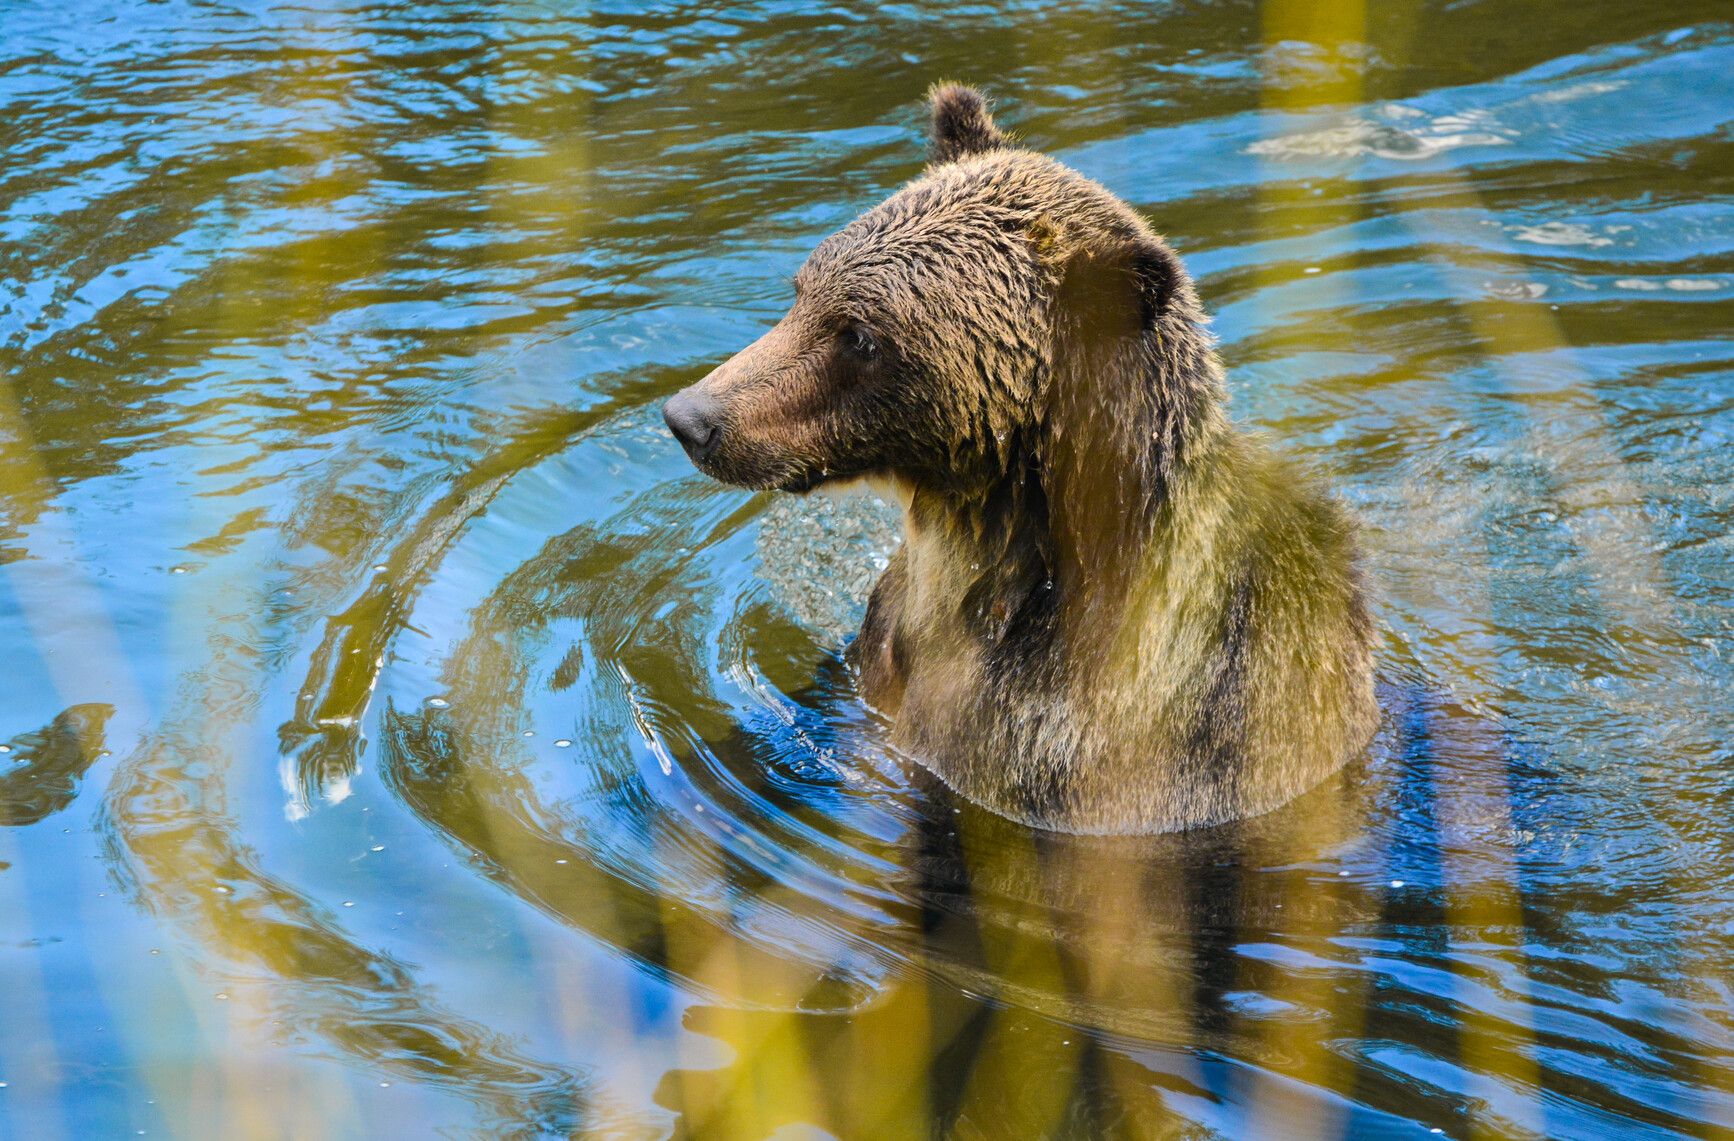 A grizzly bear (Ursus arctos horribilis) in the Atnarko River, Tweeesmuir Park.